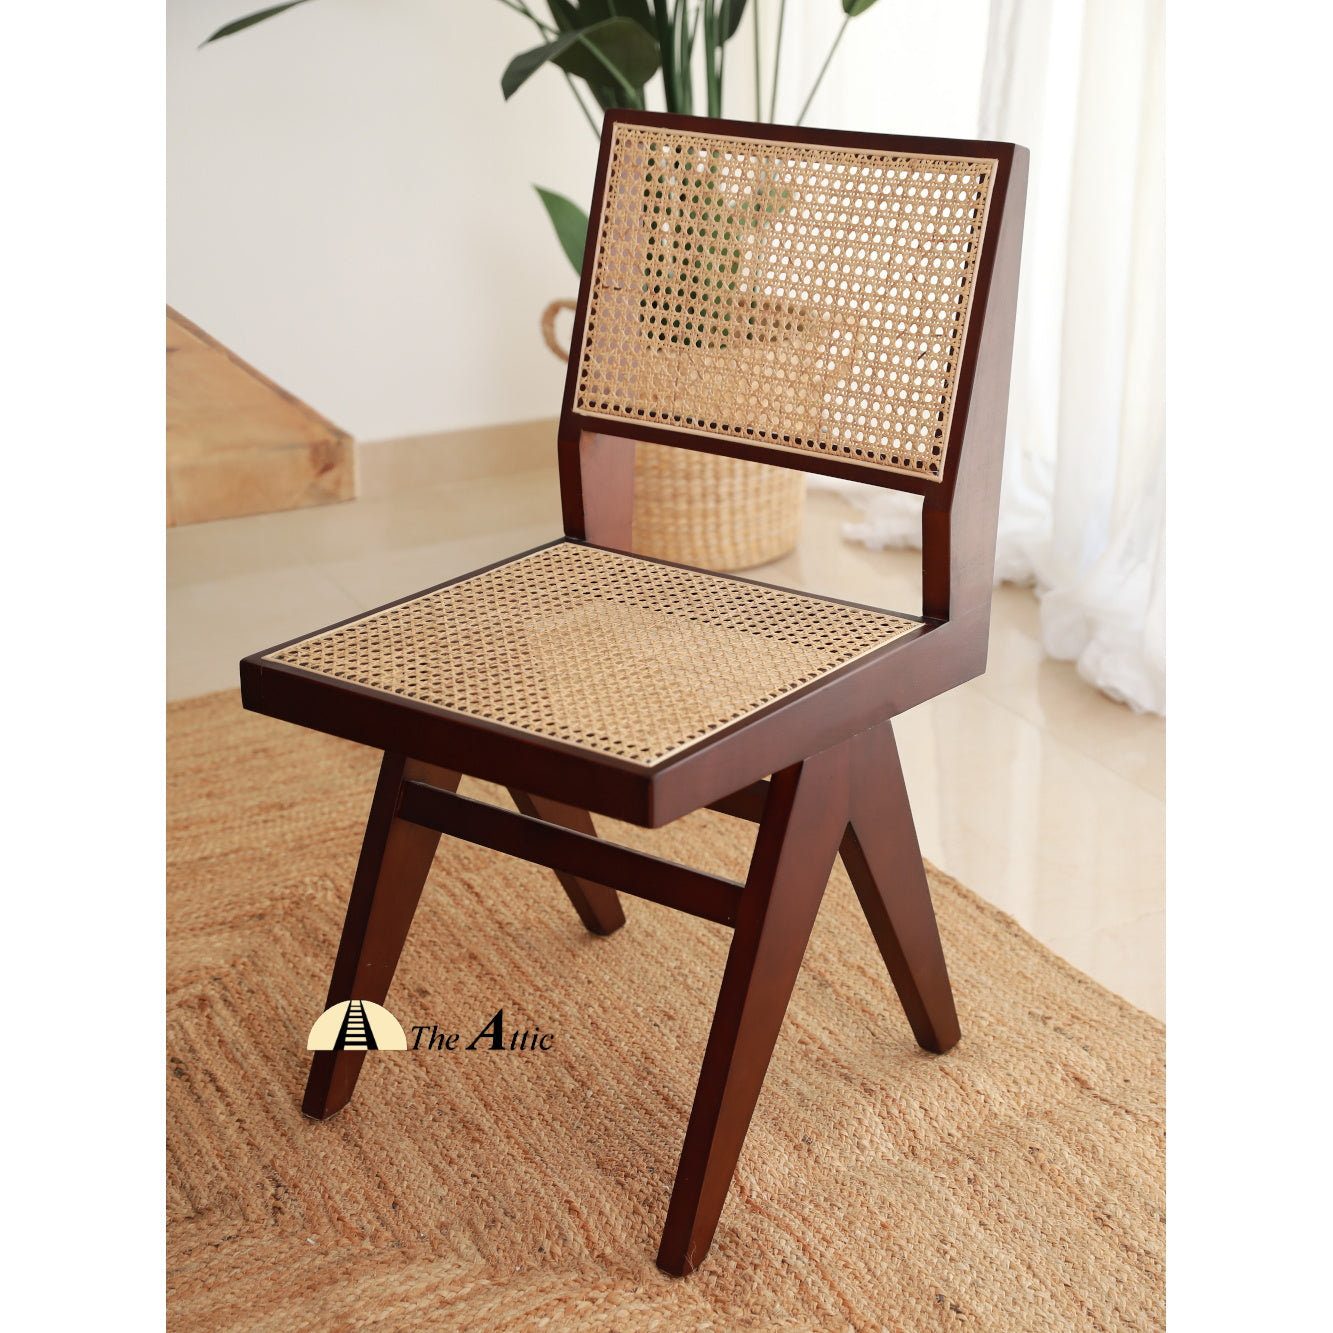 Geneva Mid-Century Modern Armless Dining Chair, Chandigarh Dining Chair - The Attic Dubai